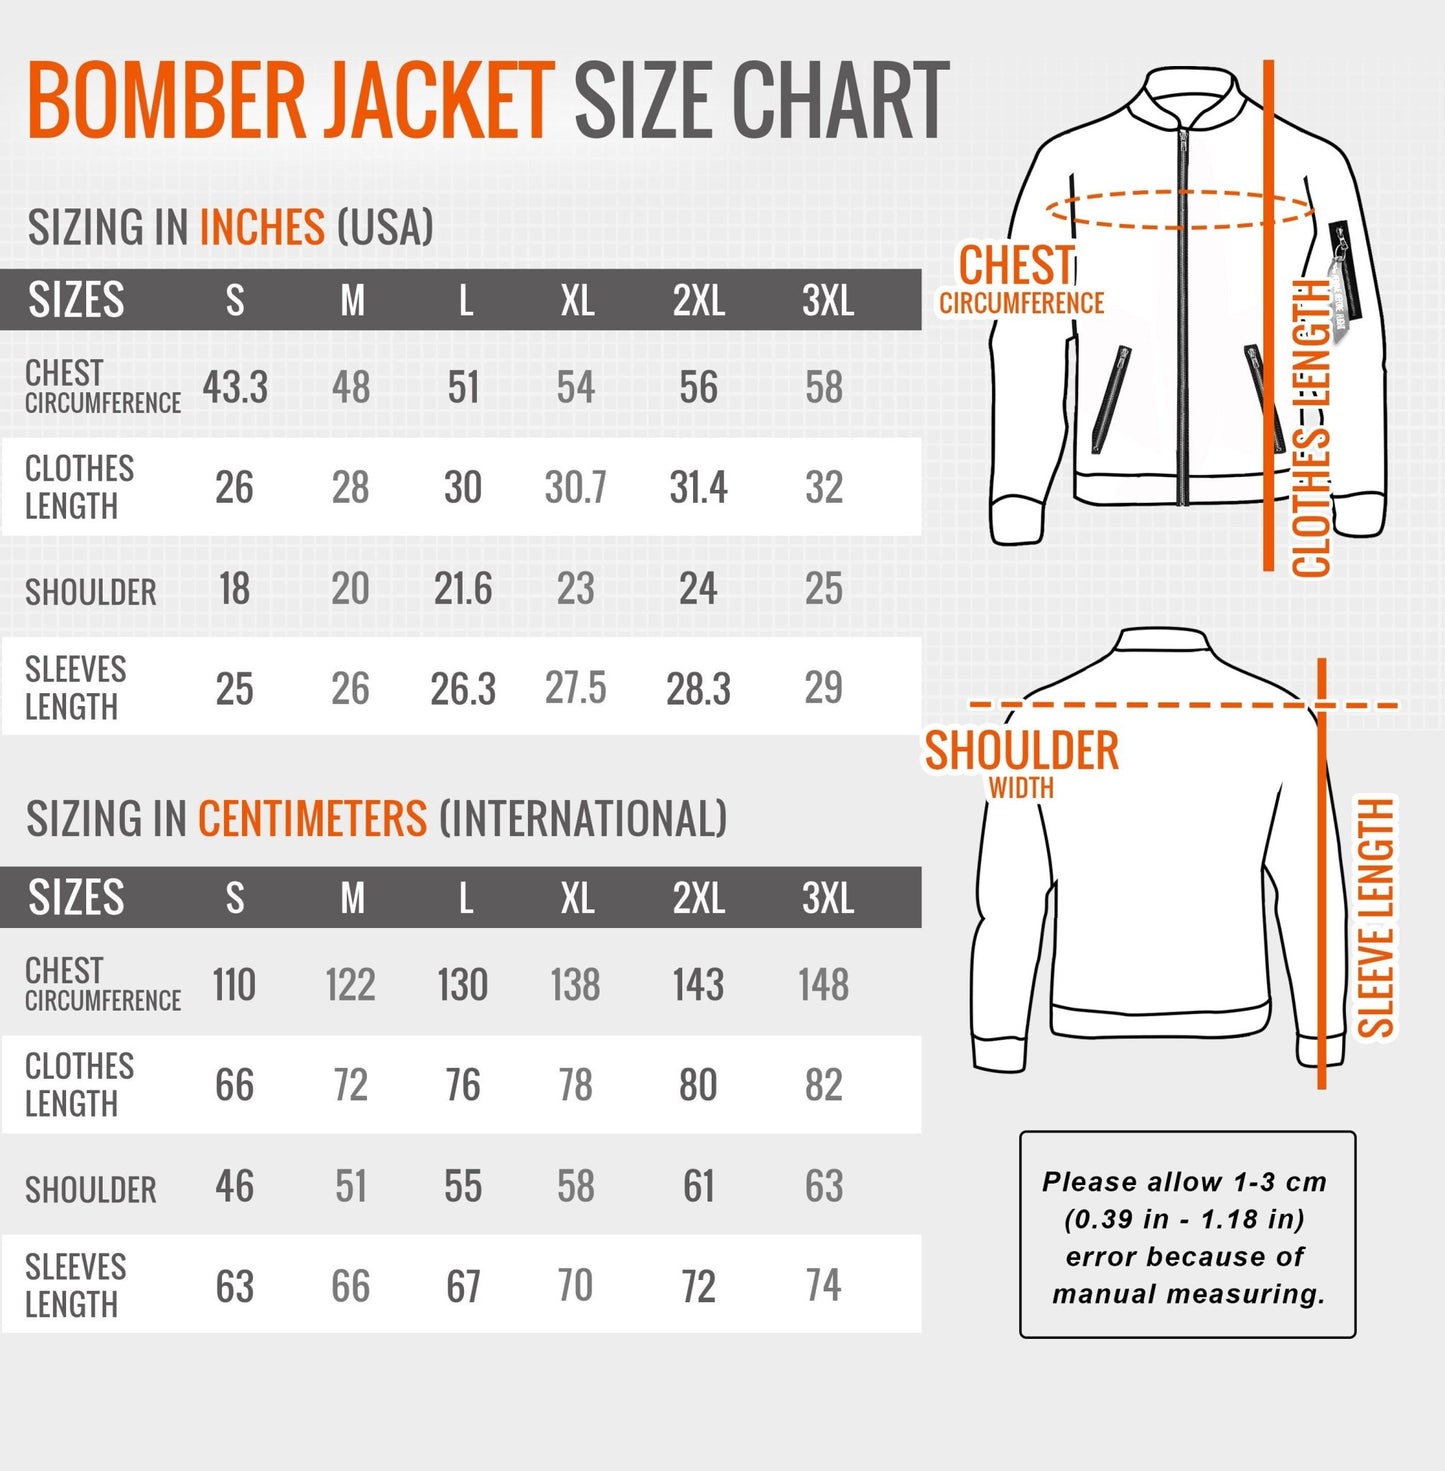 Fandomaniax - [Buy 1 Get 1 SALE] Poke League Bomber Jacket